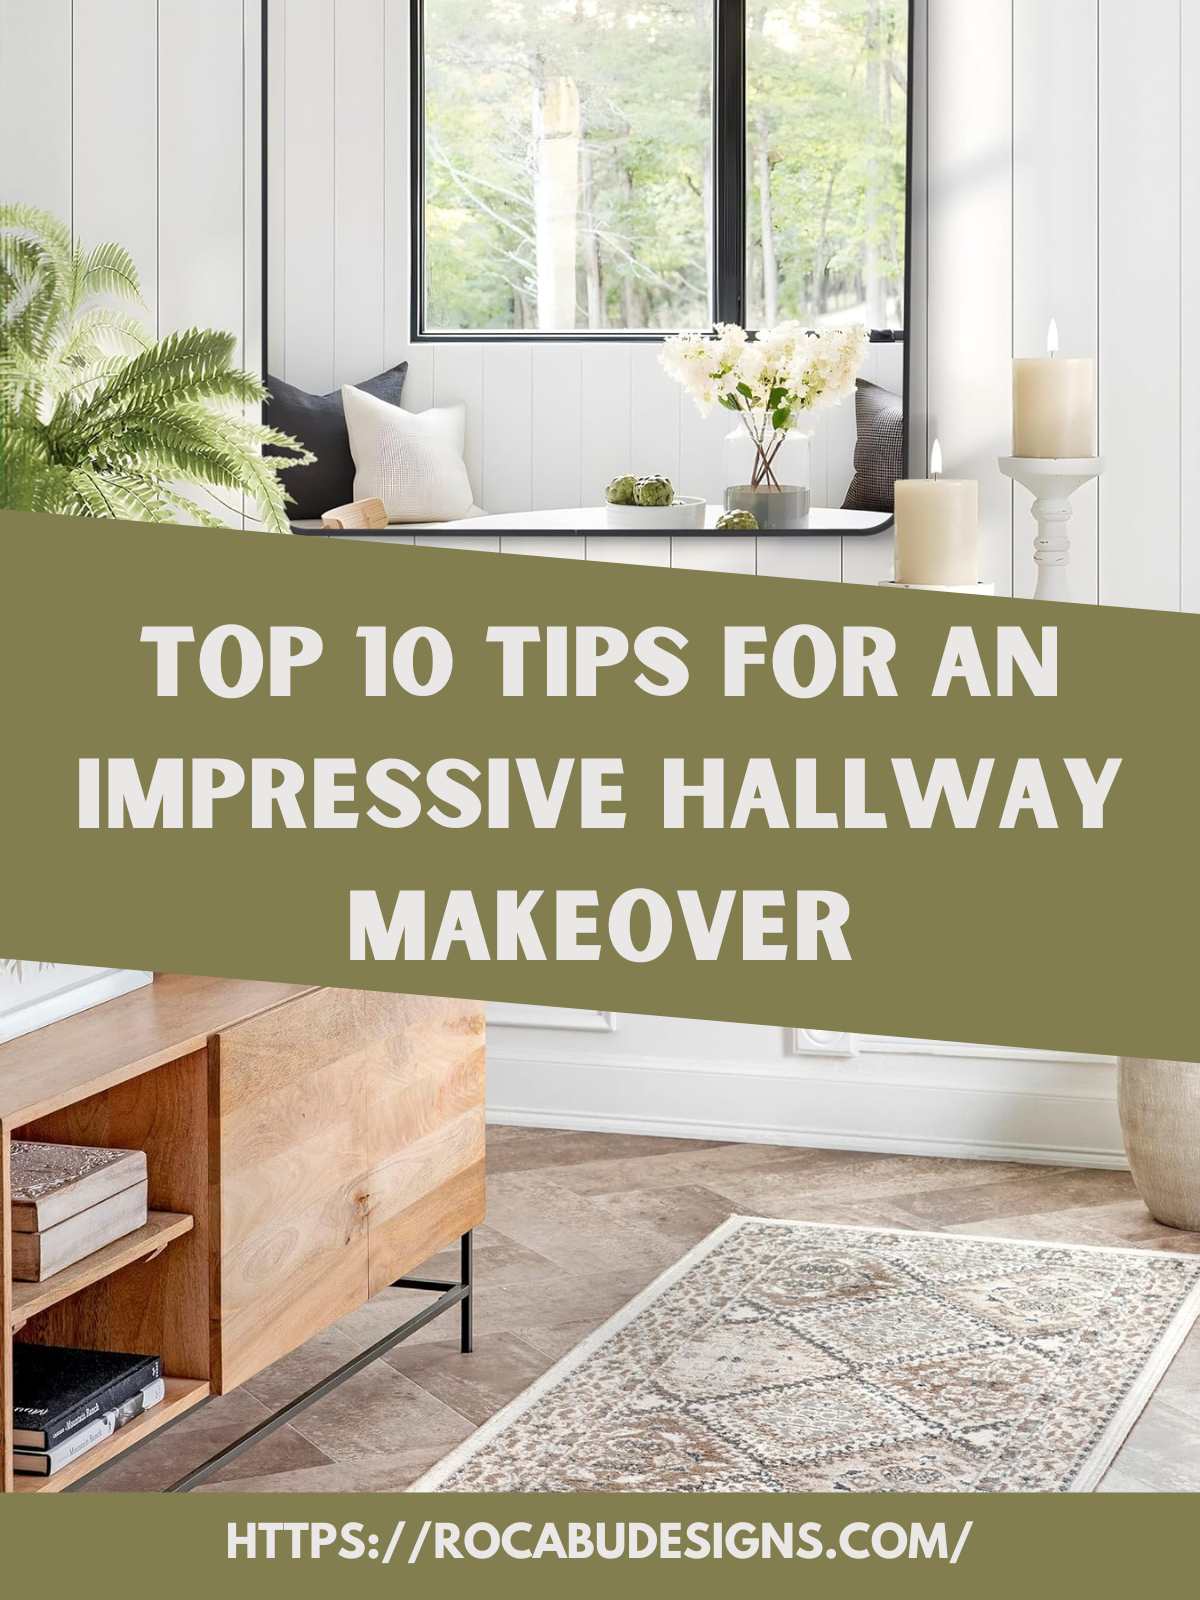 Top 10 Tips for an Impressive Hallway Makeover